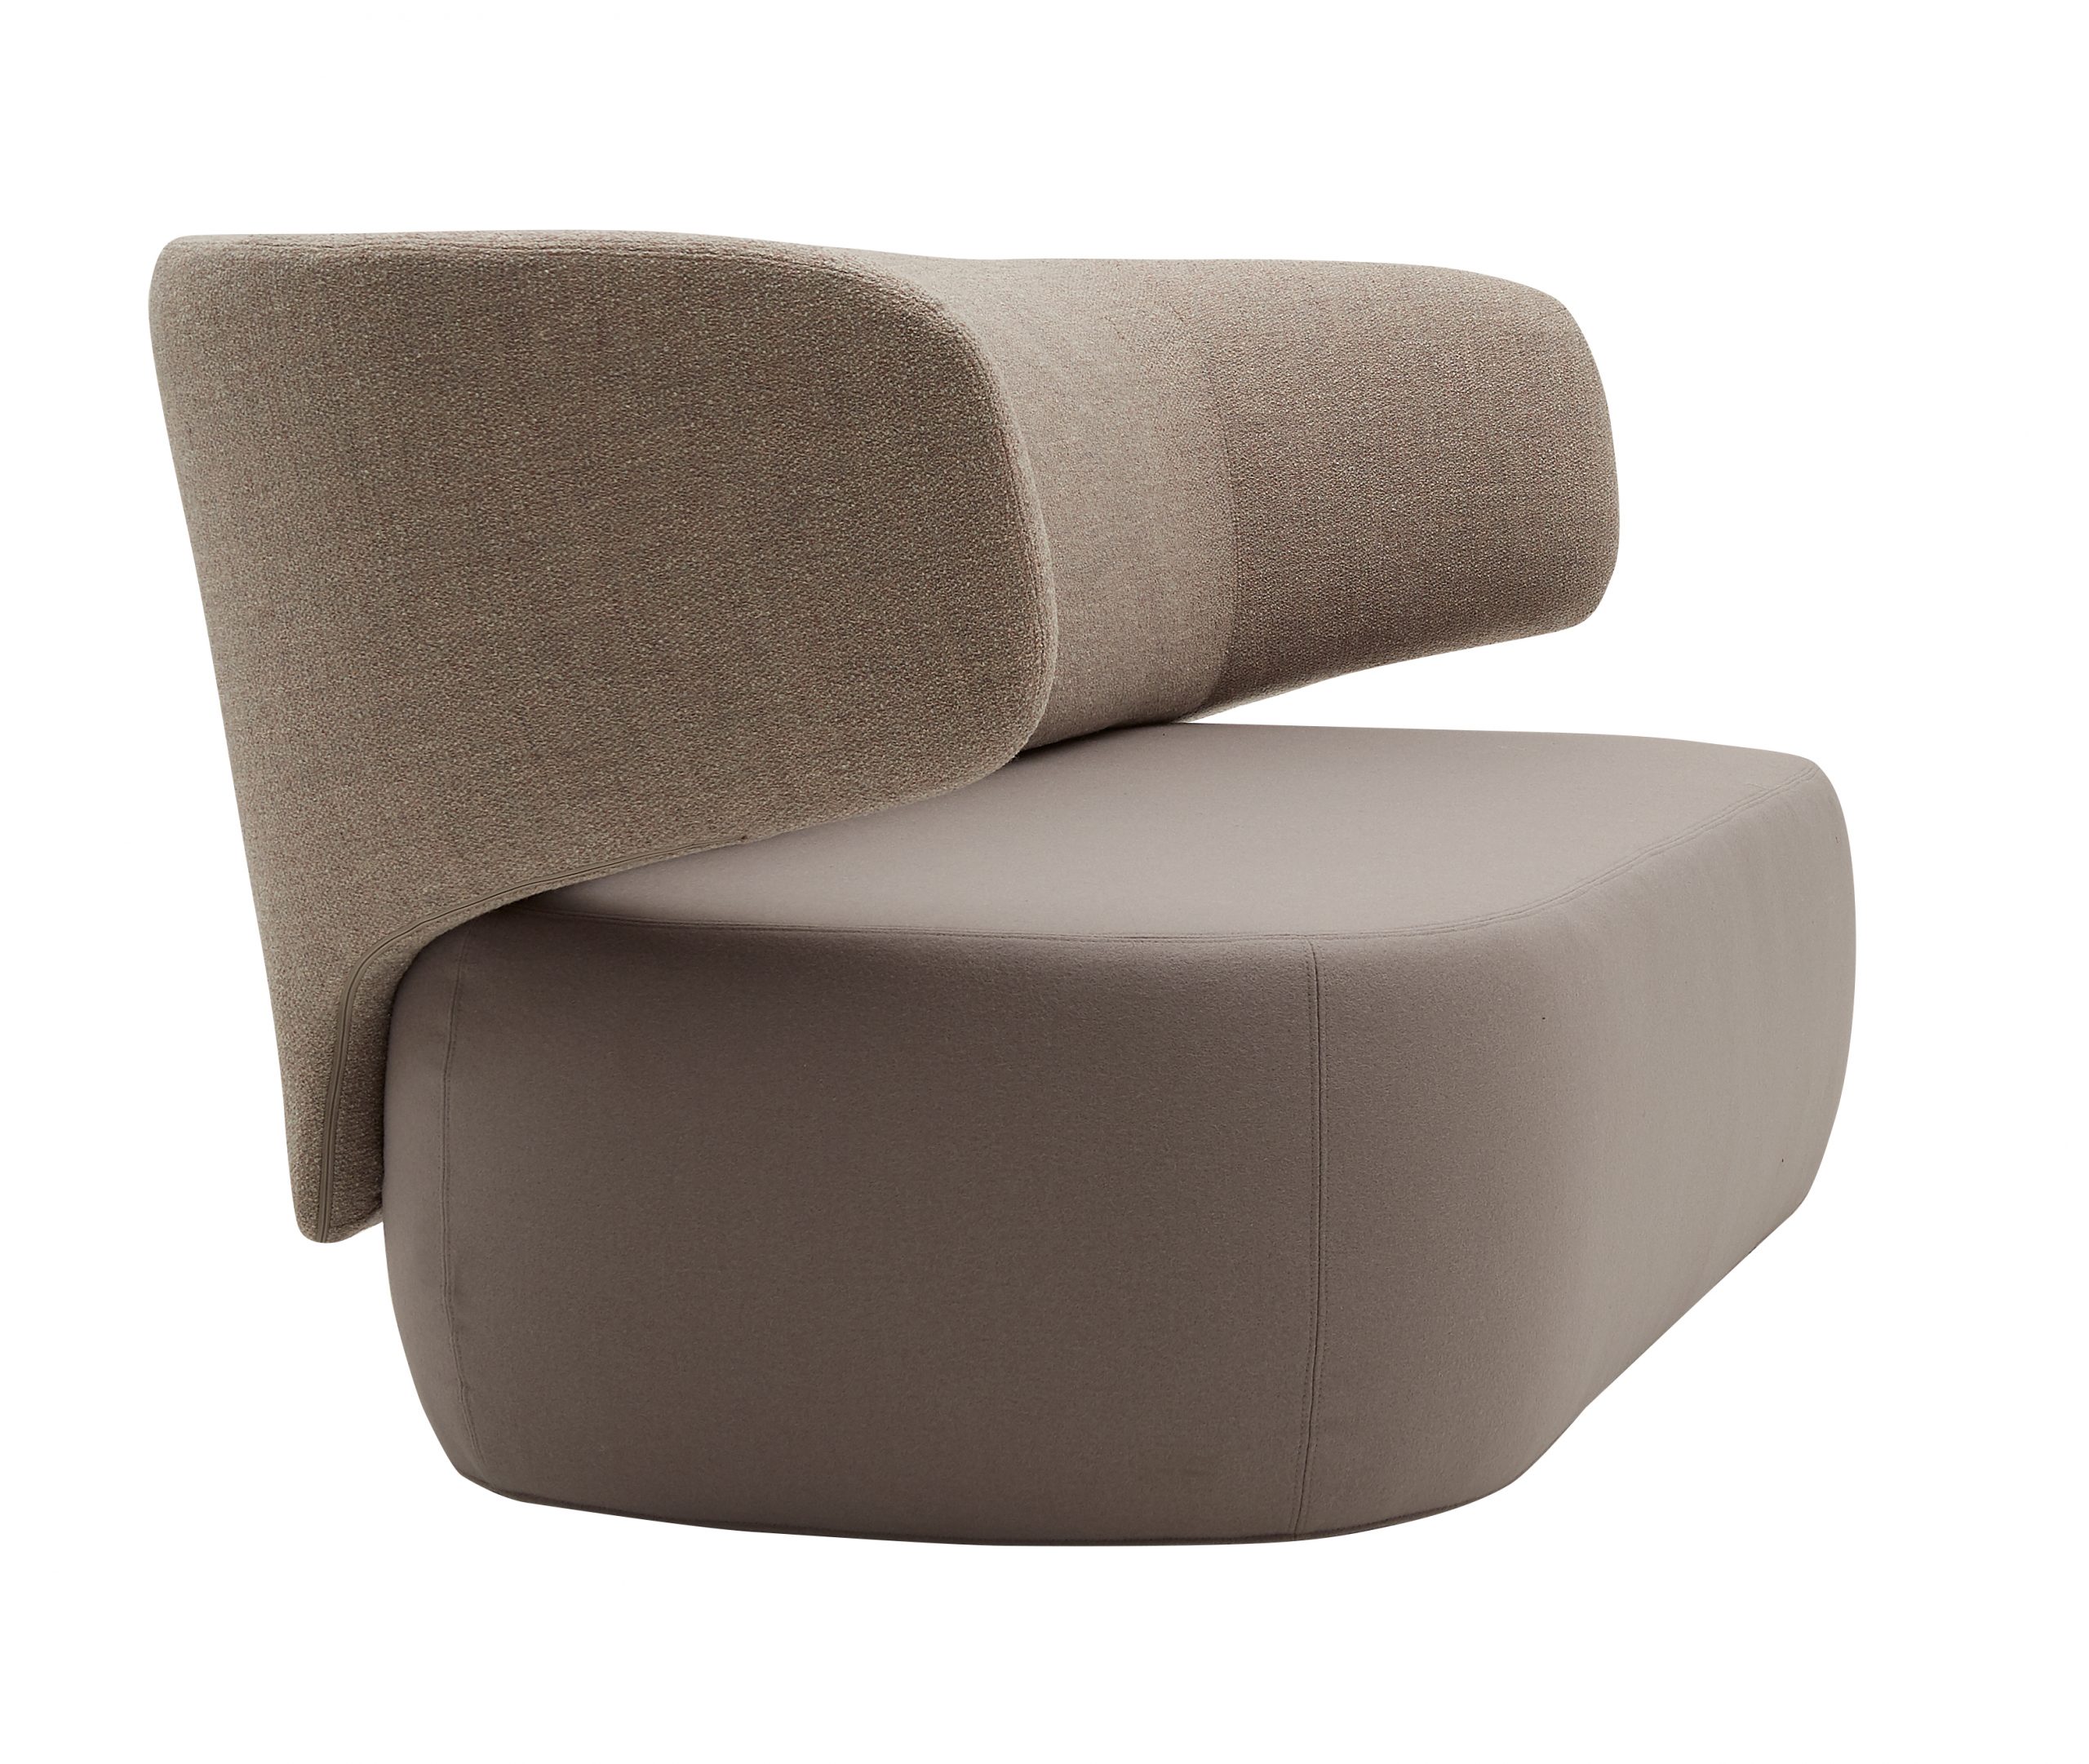 basel-sofa-chair-high-res-18-scaled.jpg